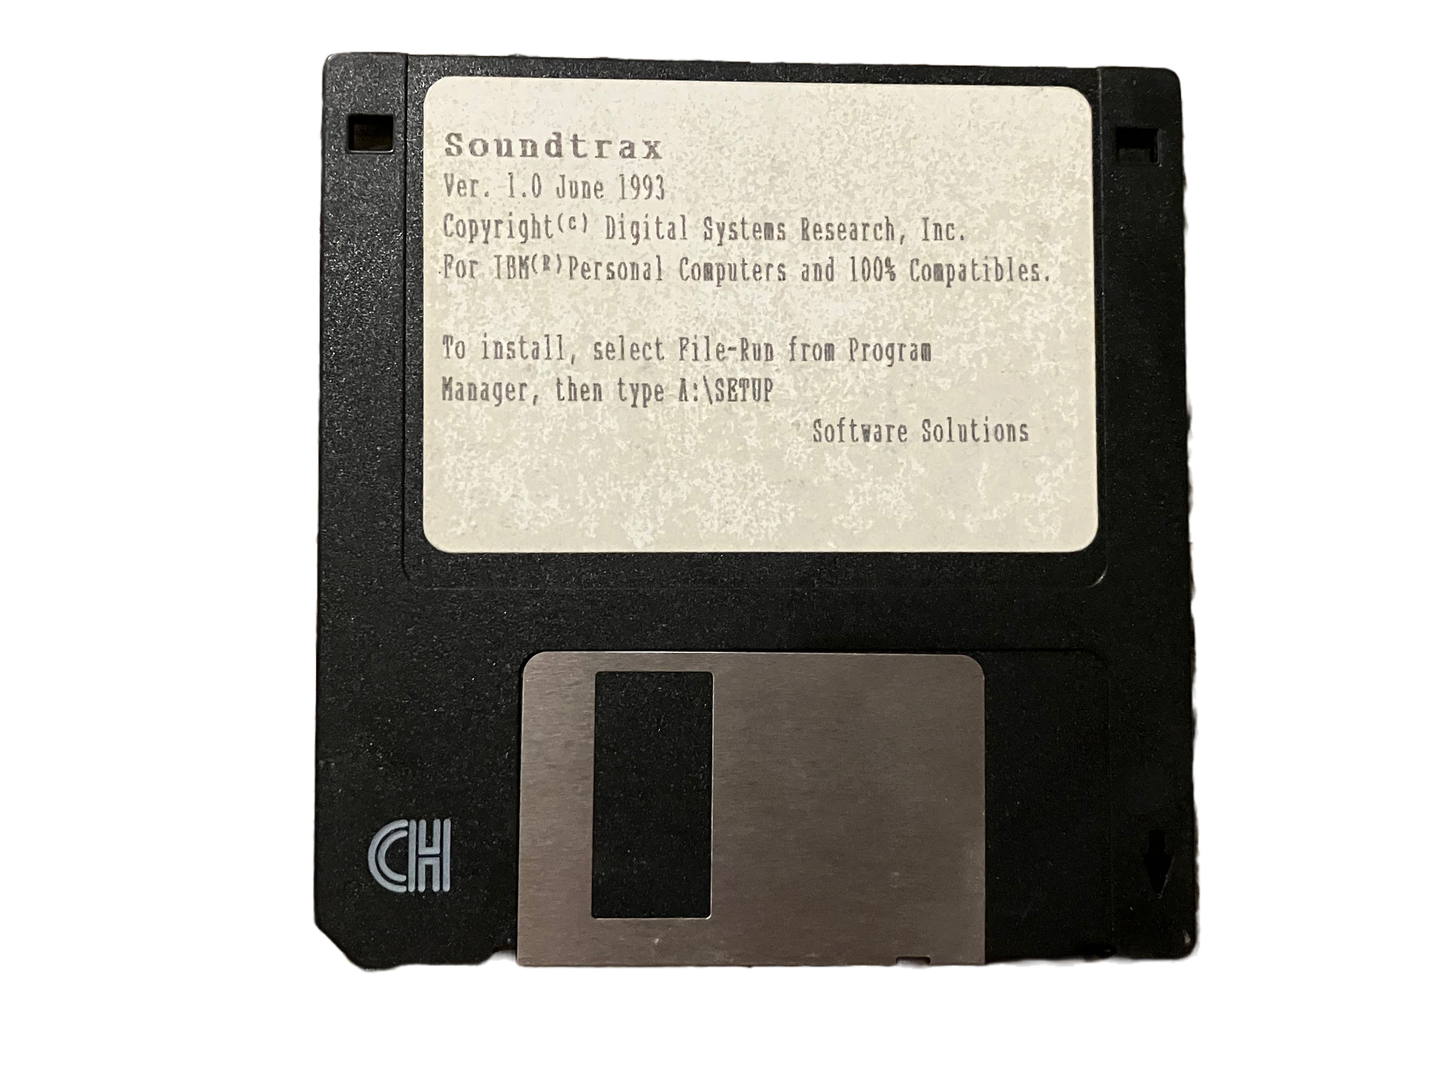 Soundtrax Vintage PC MS Dos Floppy